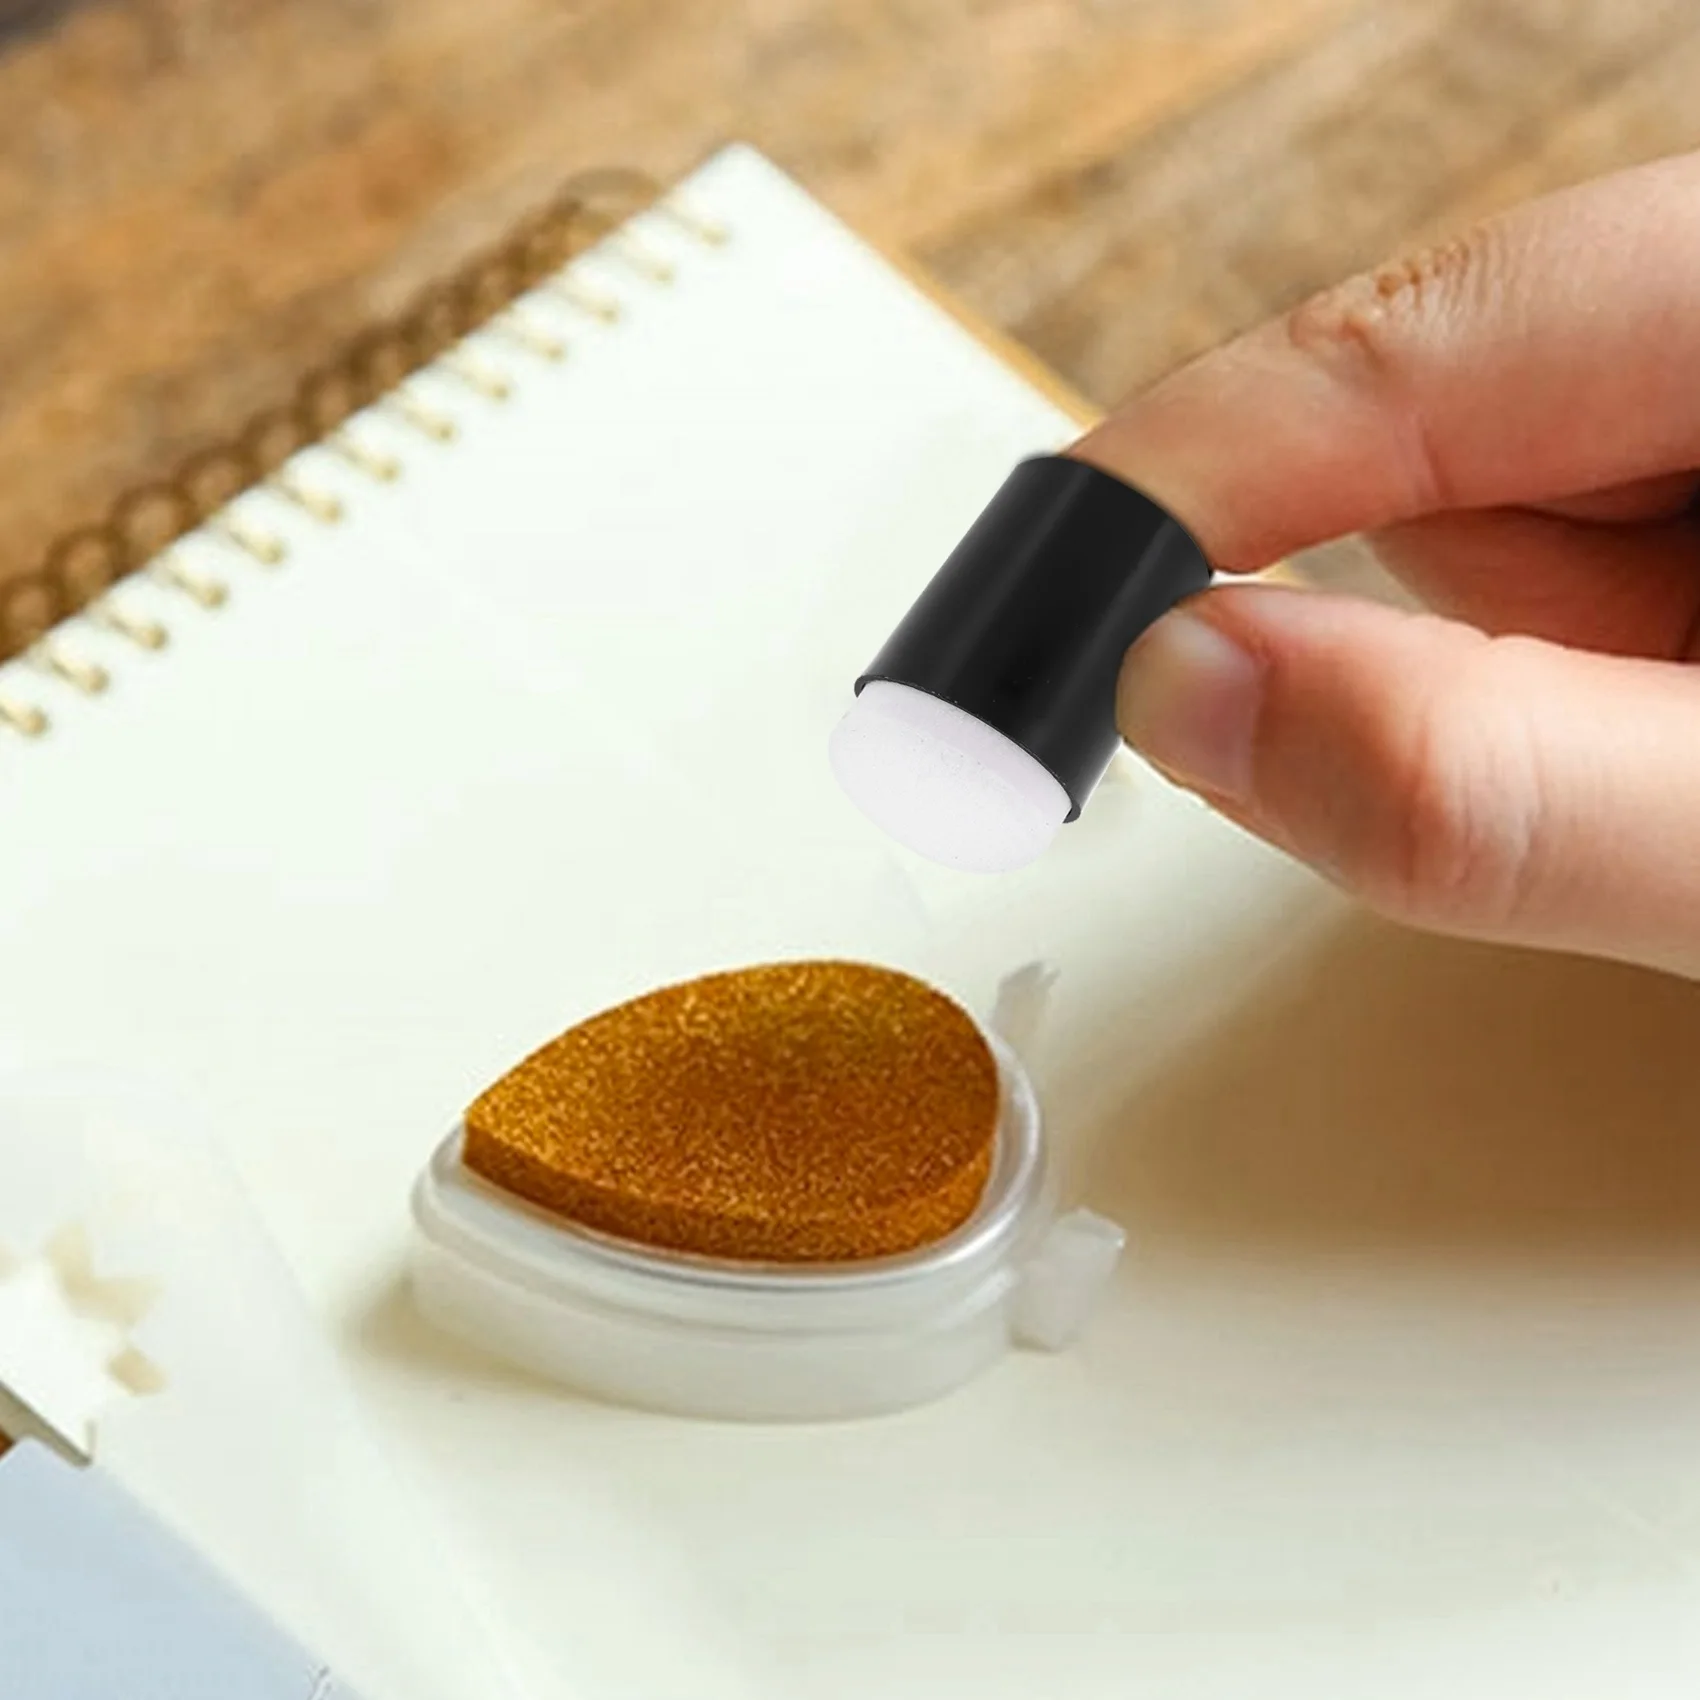 

40Pcs Finger Sponge Dauber Painting Ink Pad Stamping Brush Craft Case Art Tools With Box Office School Darwing Diy Craft